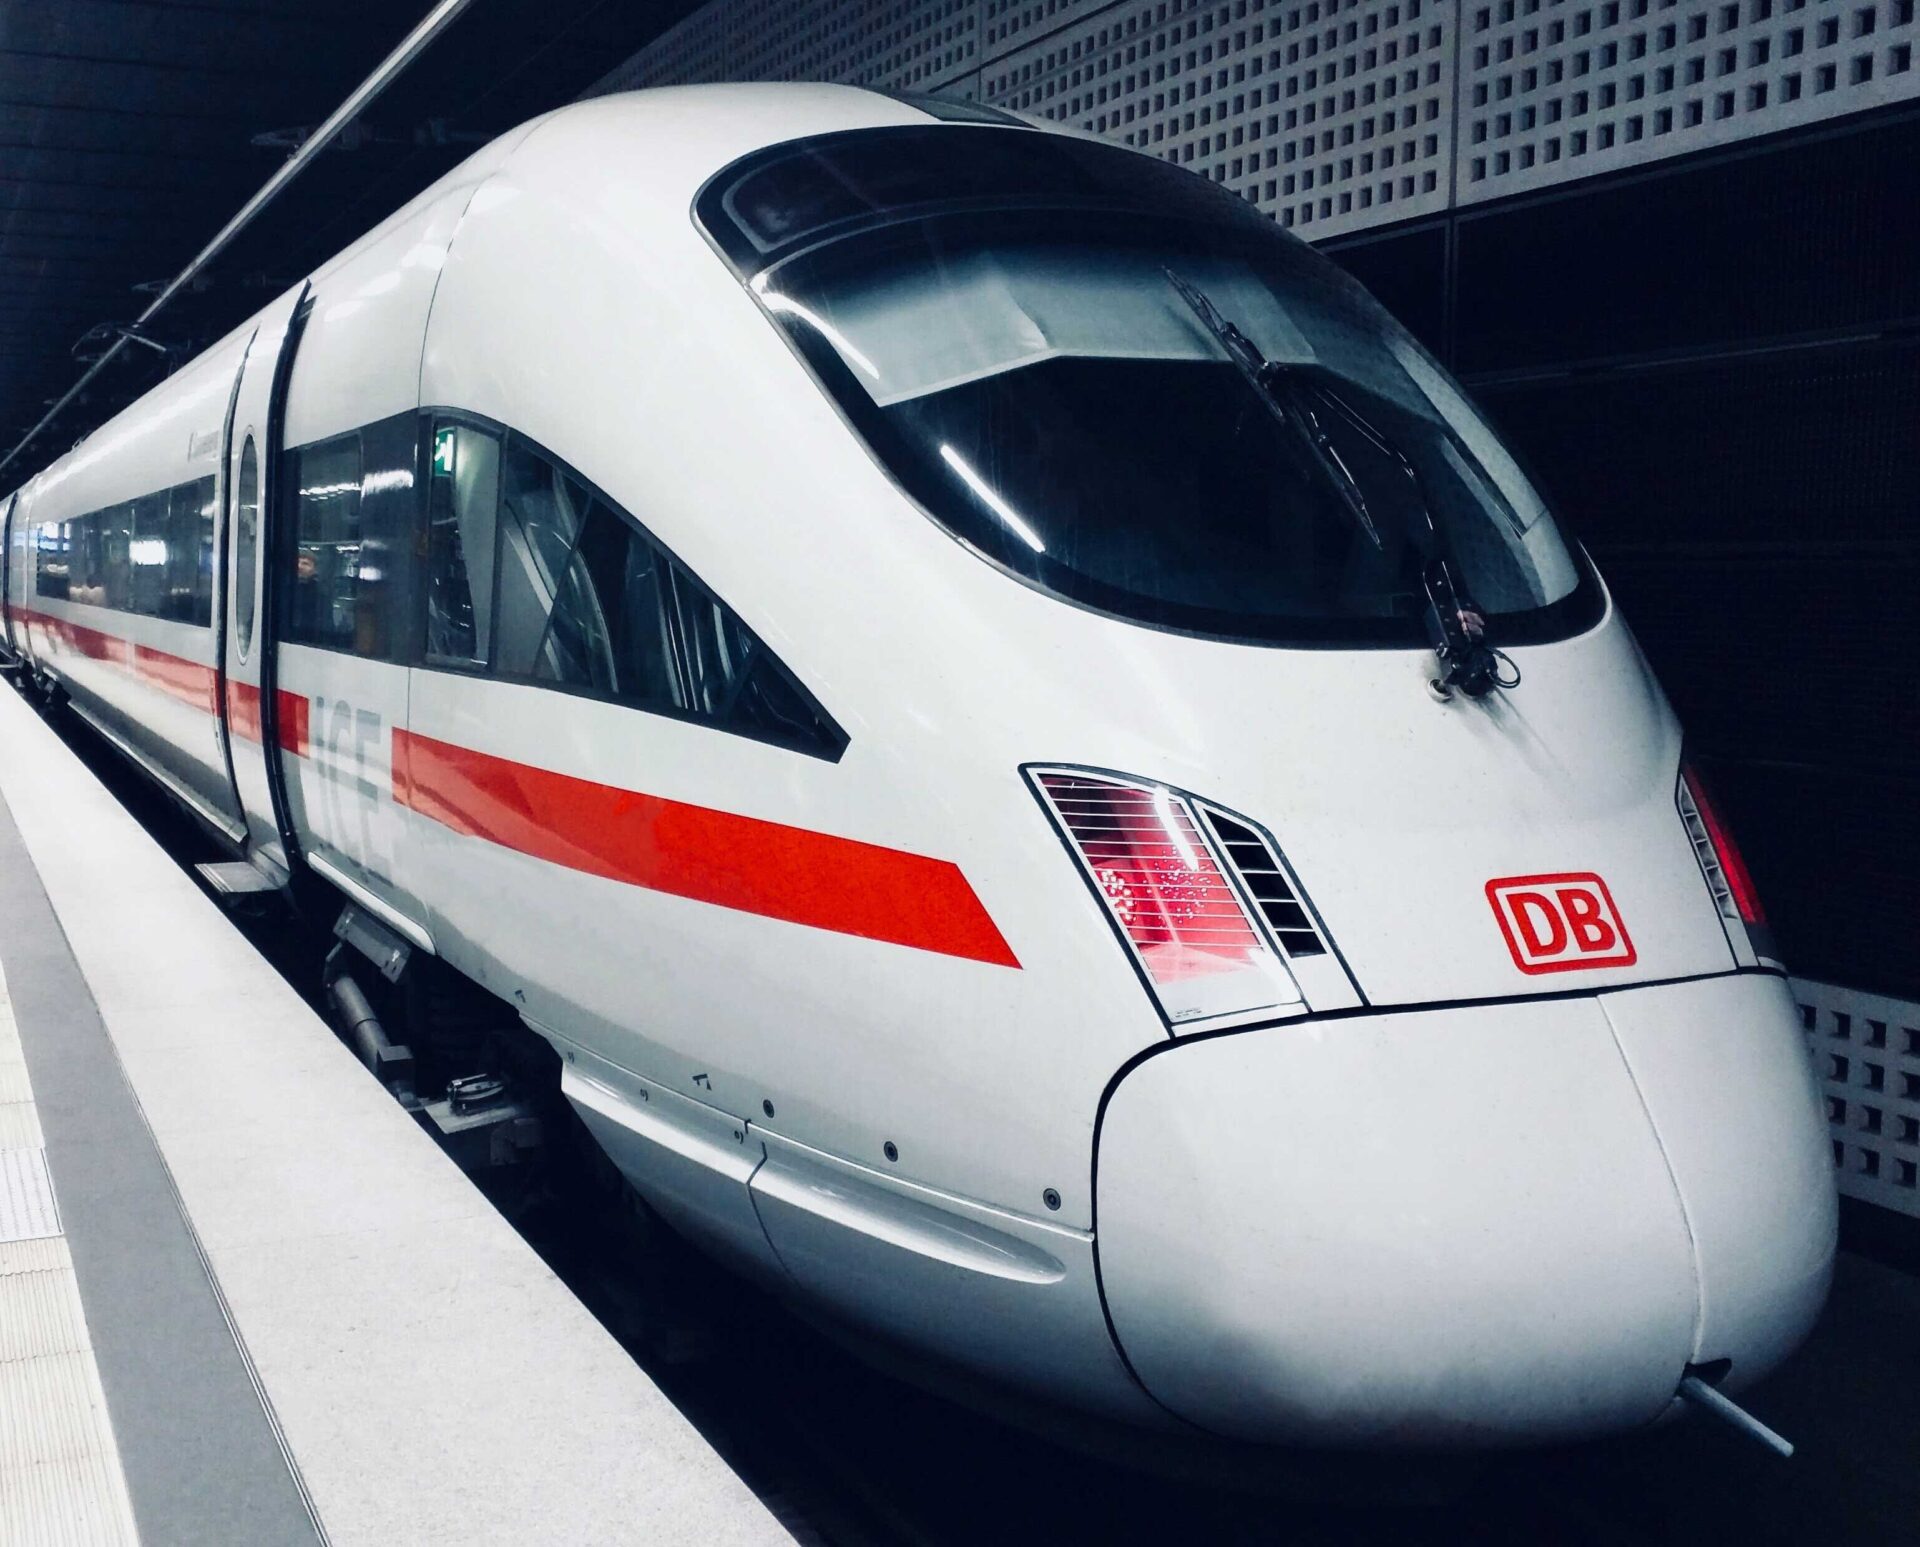 https://www.ccifrance-allemagne.fr/wp-content/uploads/2021/02/train_ICE_Allemagne-scaled.jpg